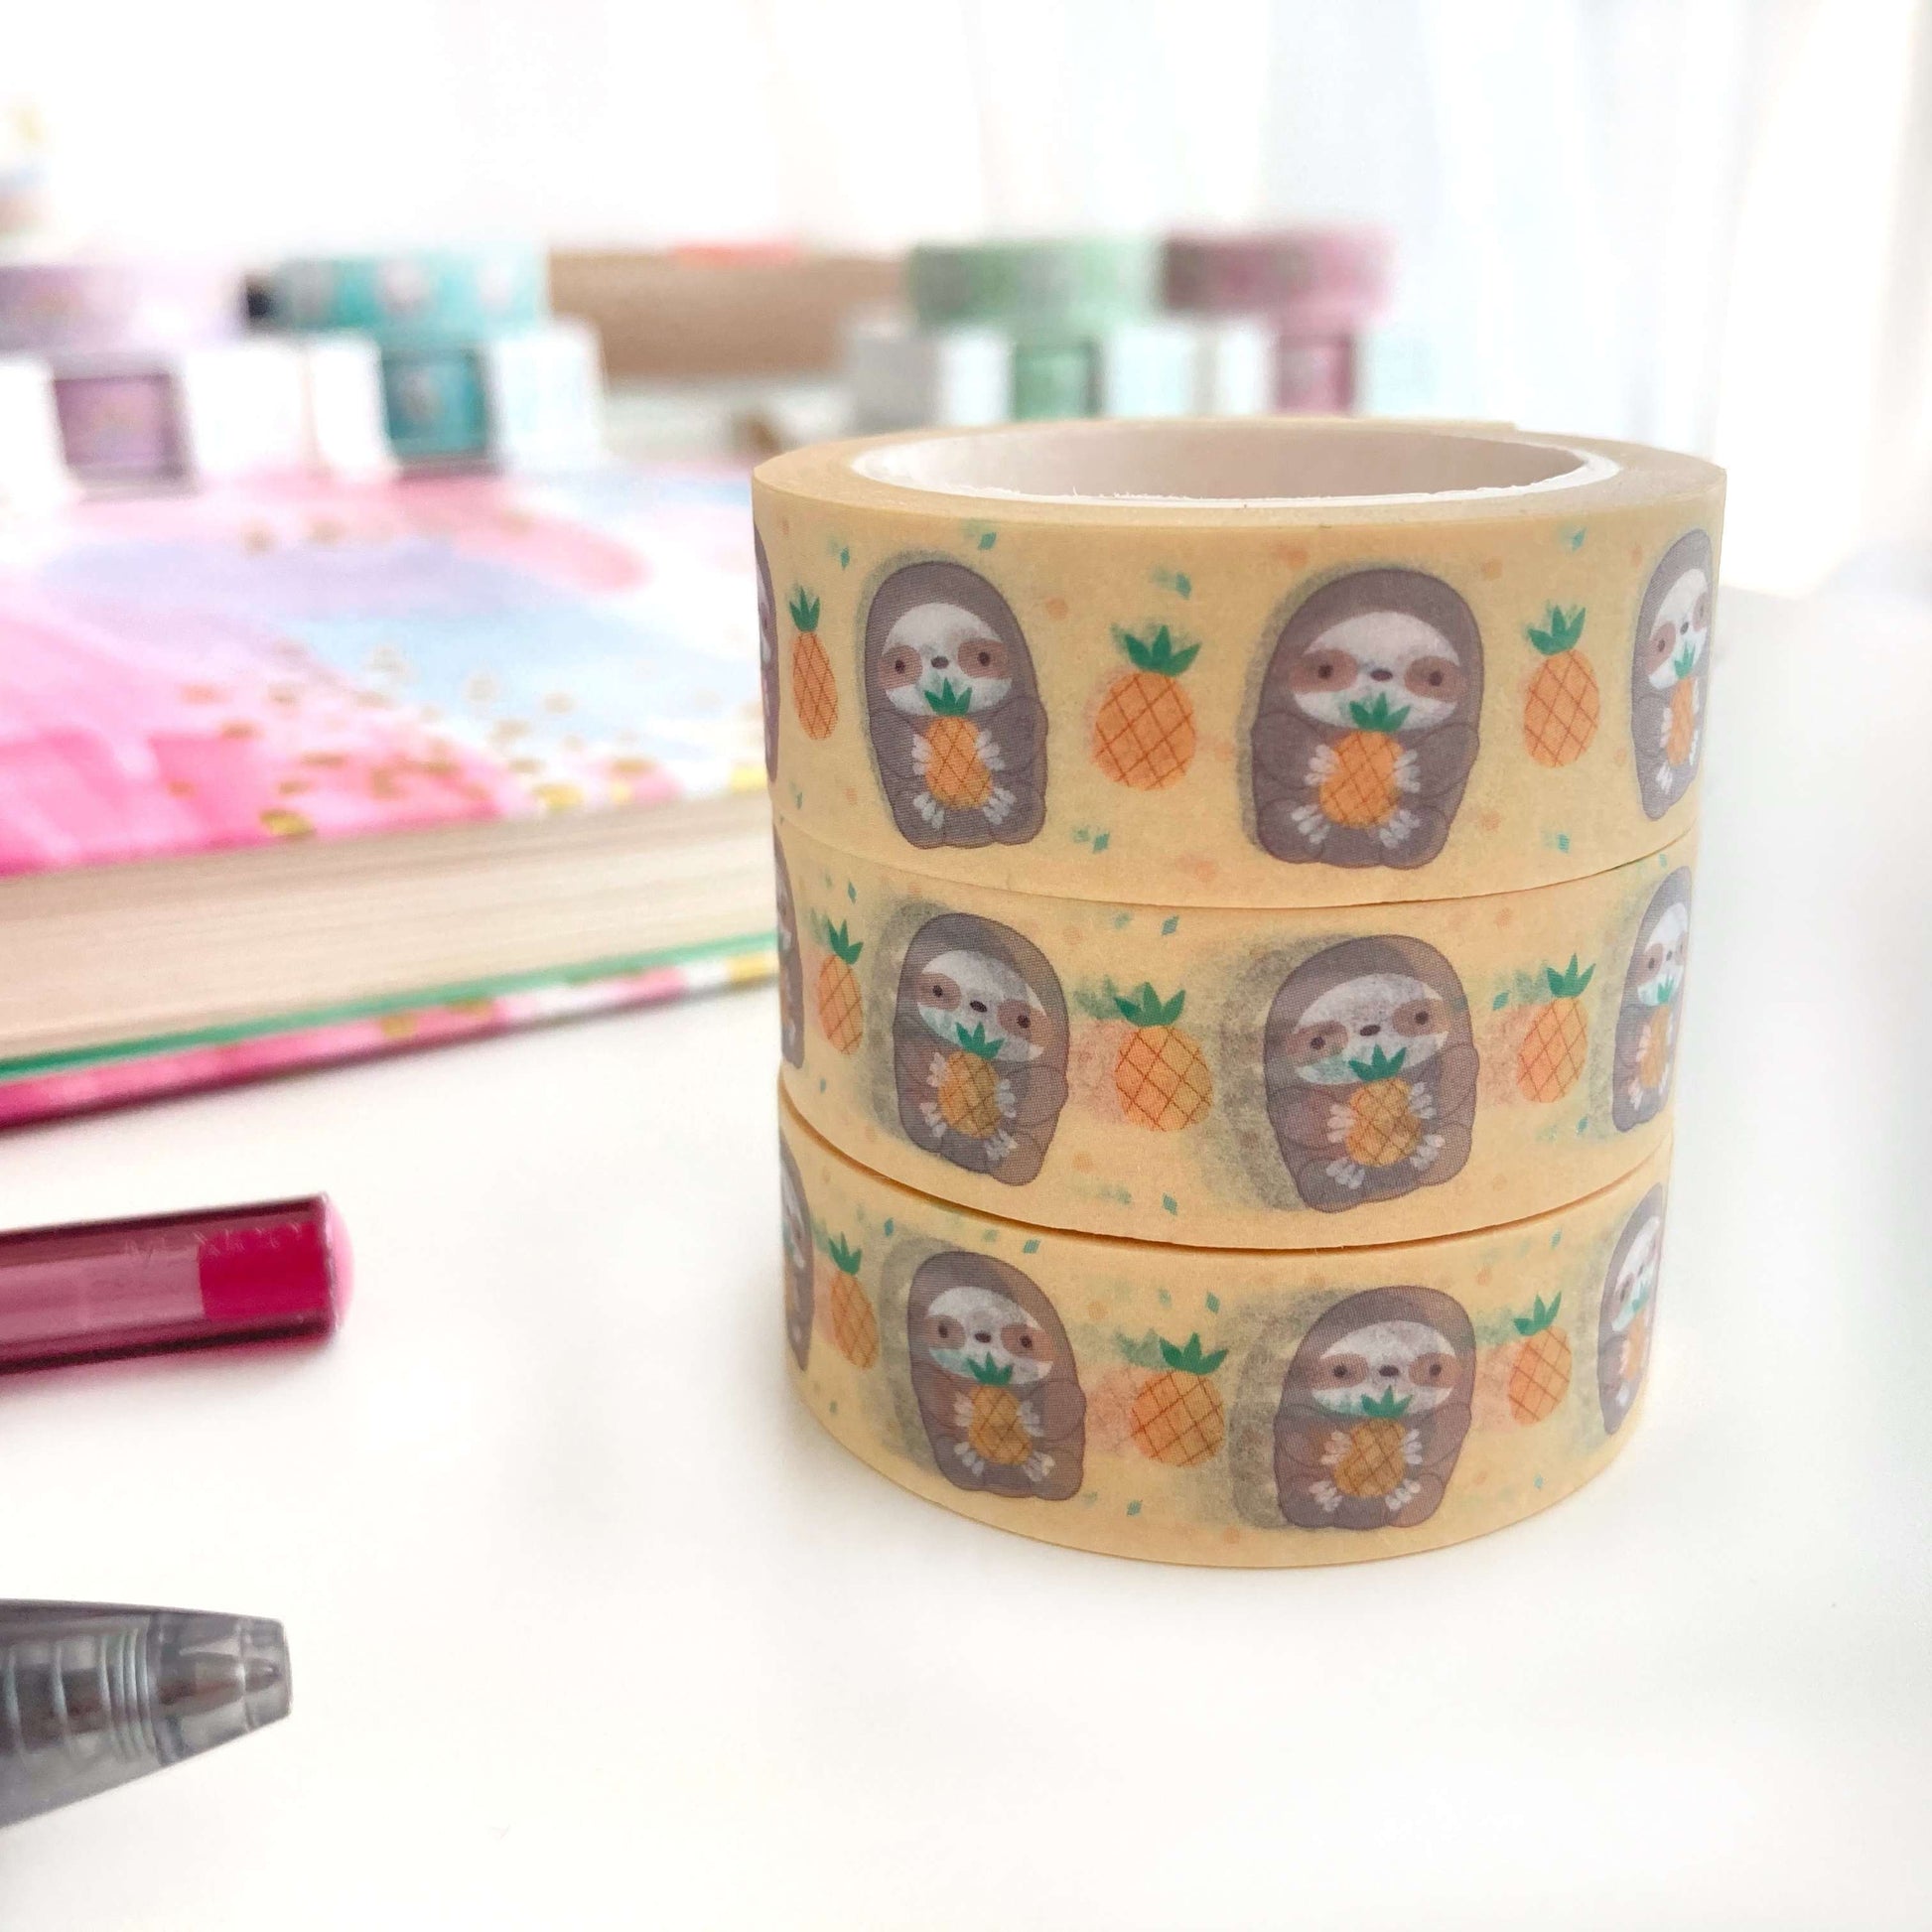 Pineapple Sloth Washi Tape - Fruit Washi Roll - Cute Sloth Stationery